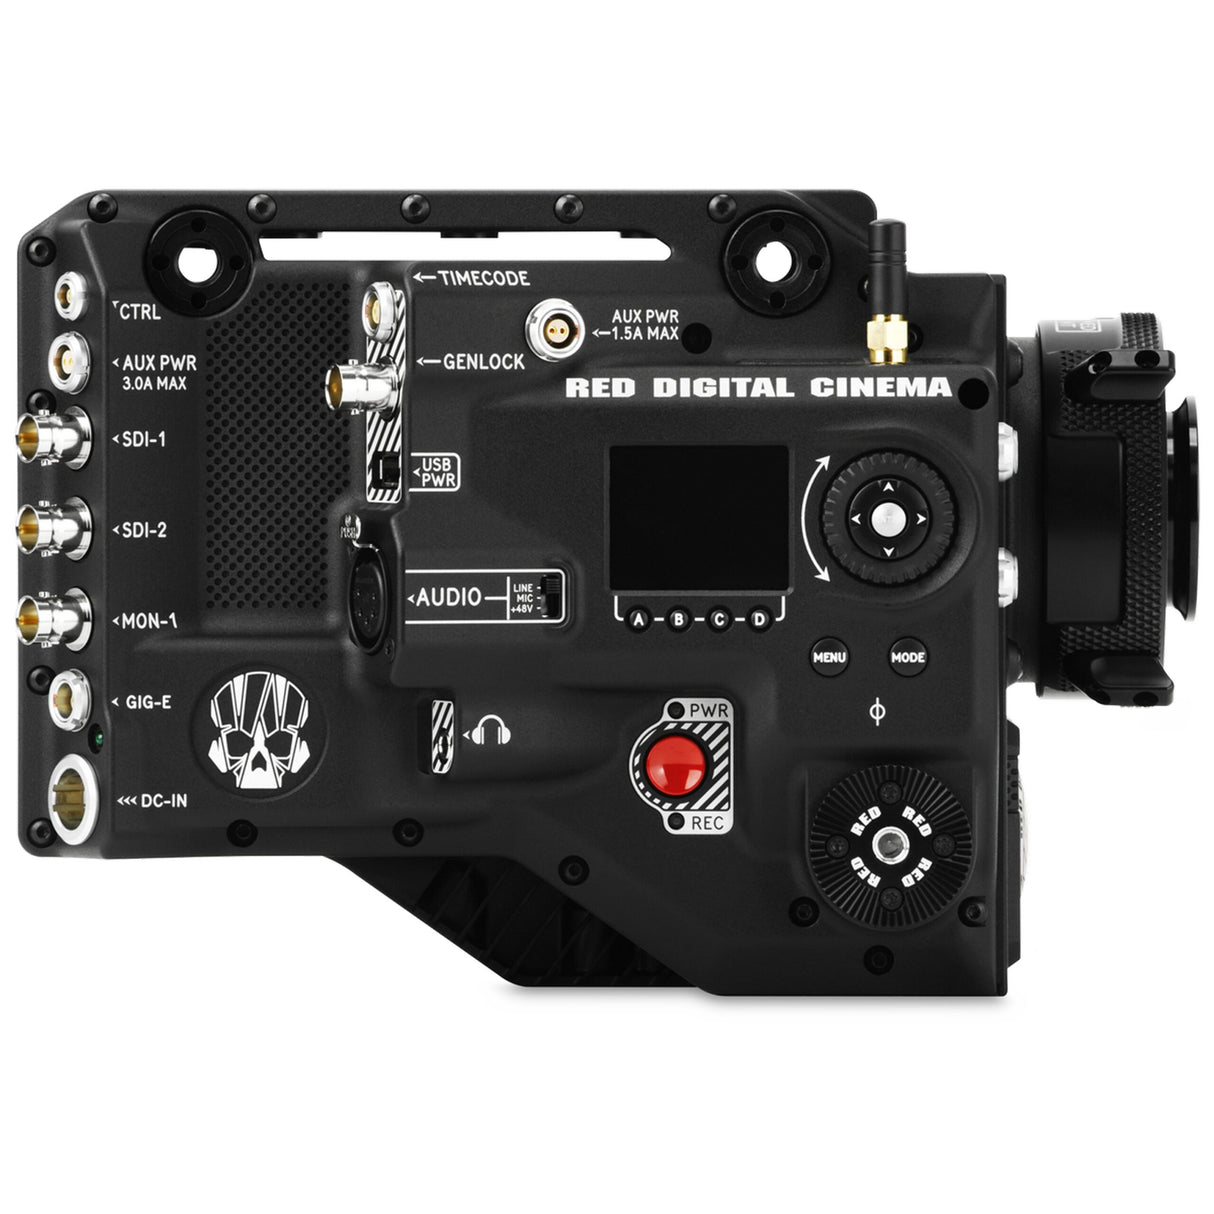 RED 710-0331 RANGER Camera with GEMINI 5K S35 Sensor, Gold Mount